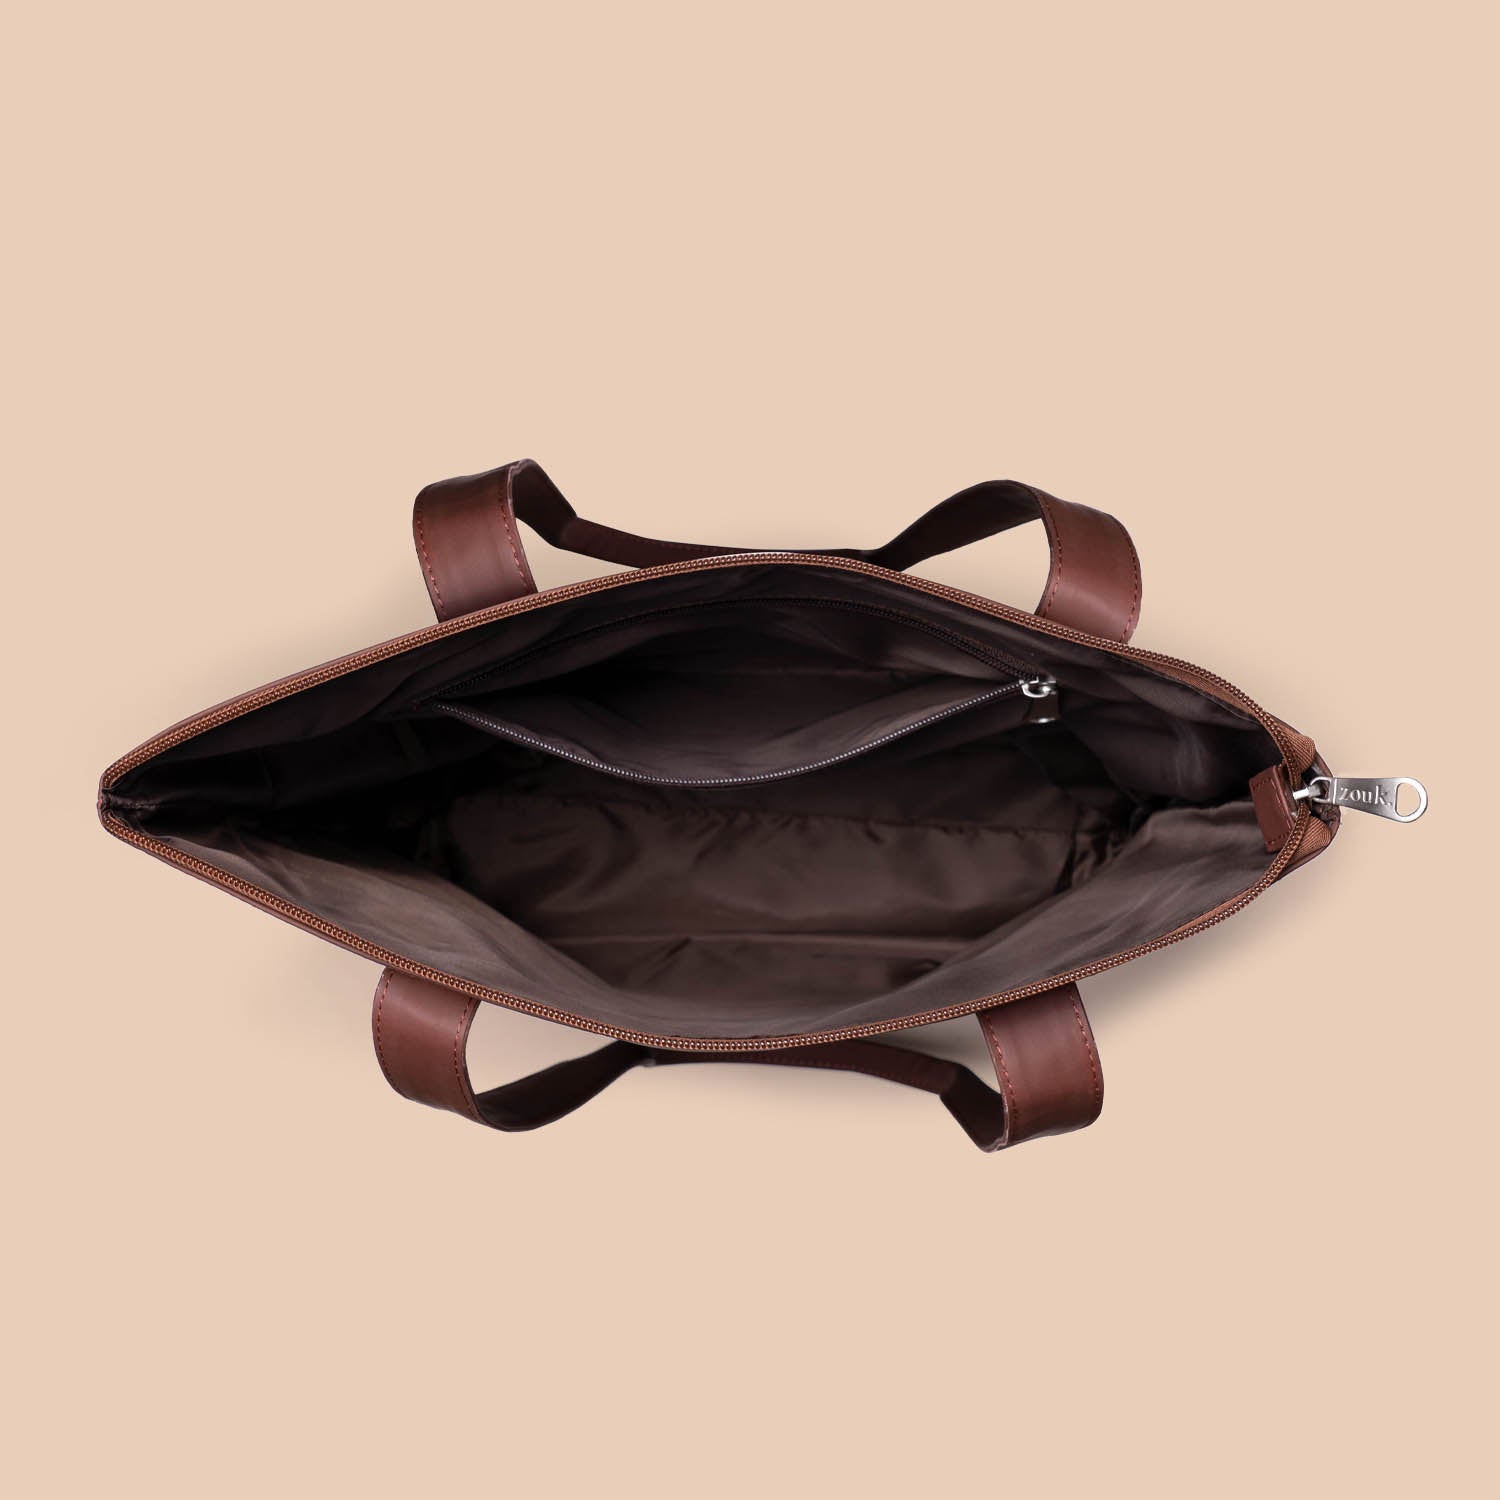 Kutch Gamthi & Gwalior Weaves - Everyday Tote Bag & Flap Sling Bag Combo